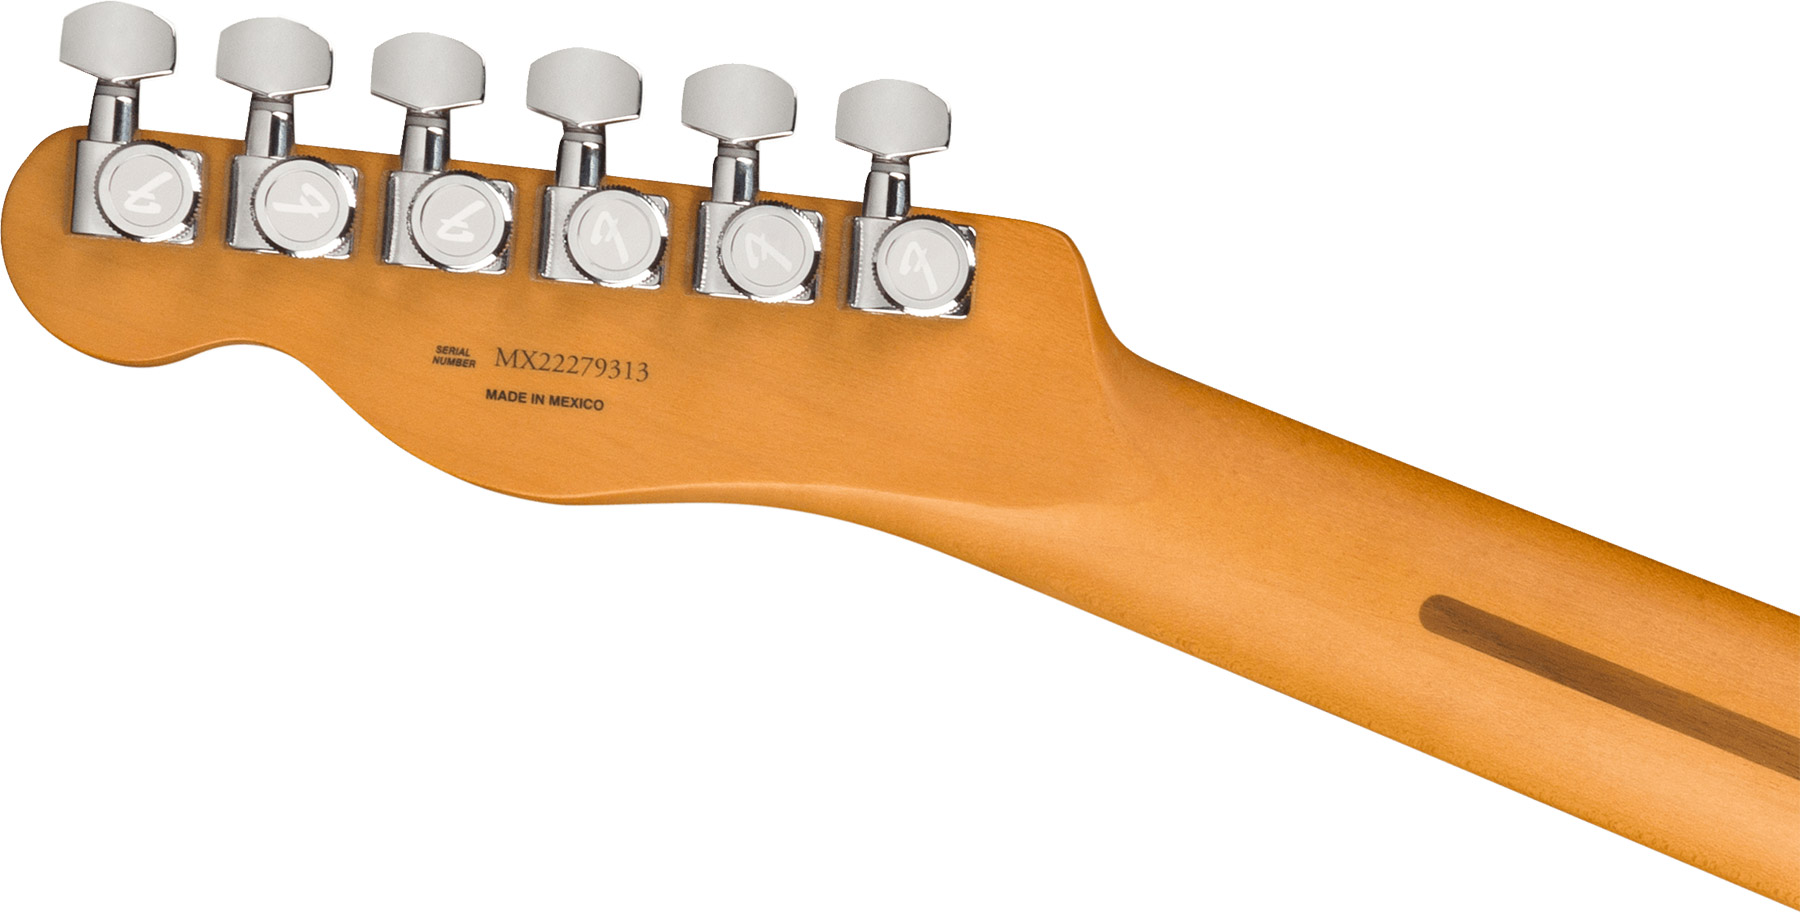 Fender Tele Player Plus Nashville Mex 2023 2s Ht Pf - Sienna Sunburst - Tel shape electric guitar - Variation 3